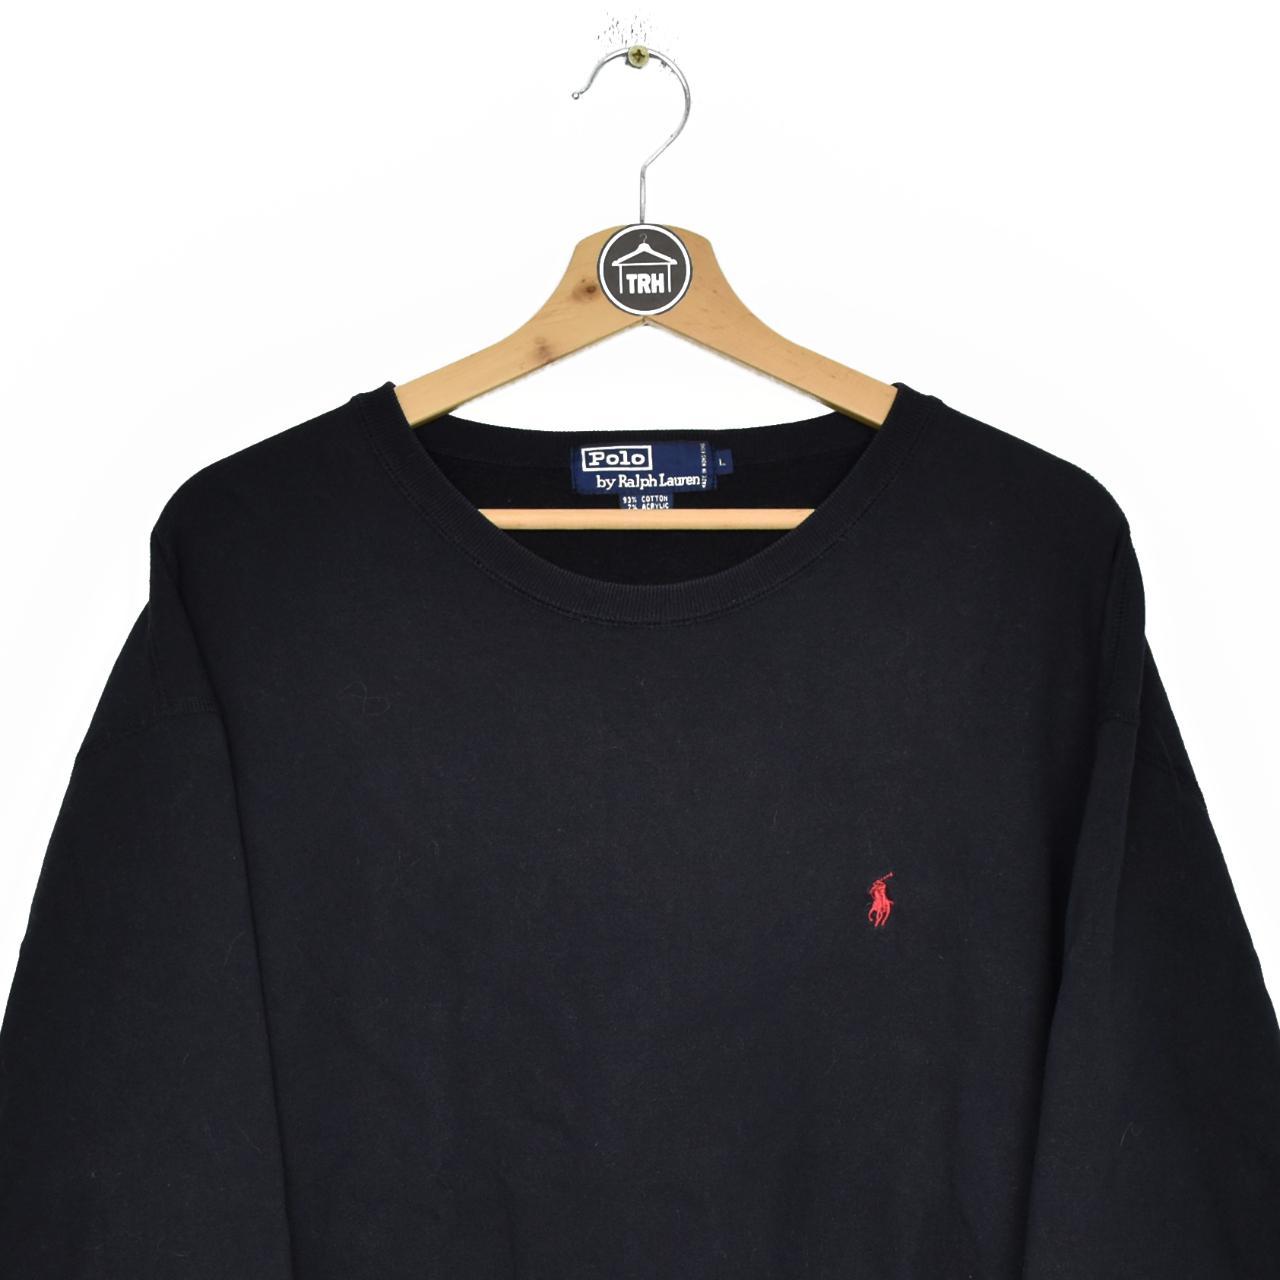 Black Polo Ralph Lauren Embroidered Sweatshirt | Red... - Depop